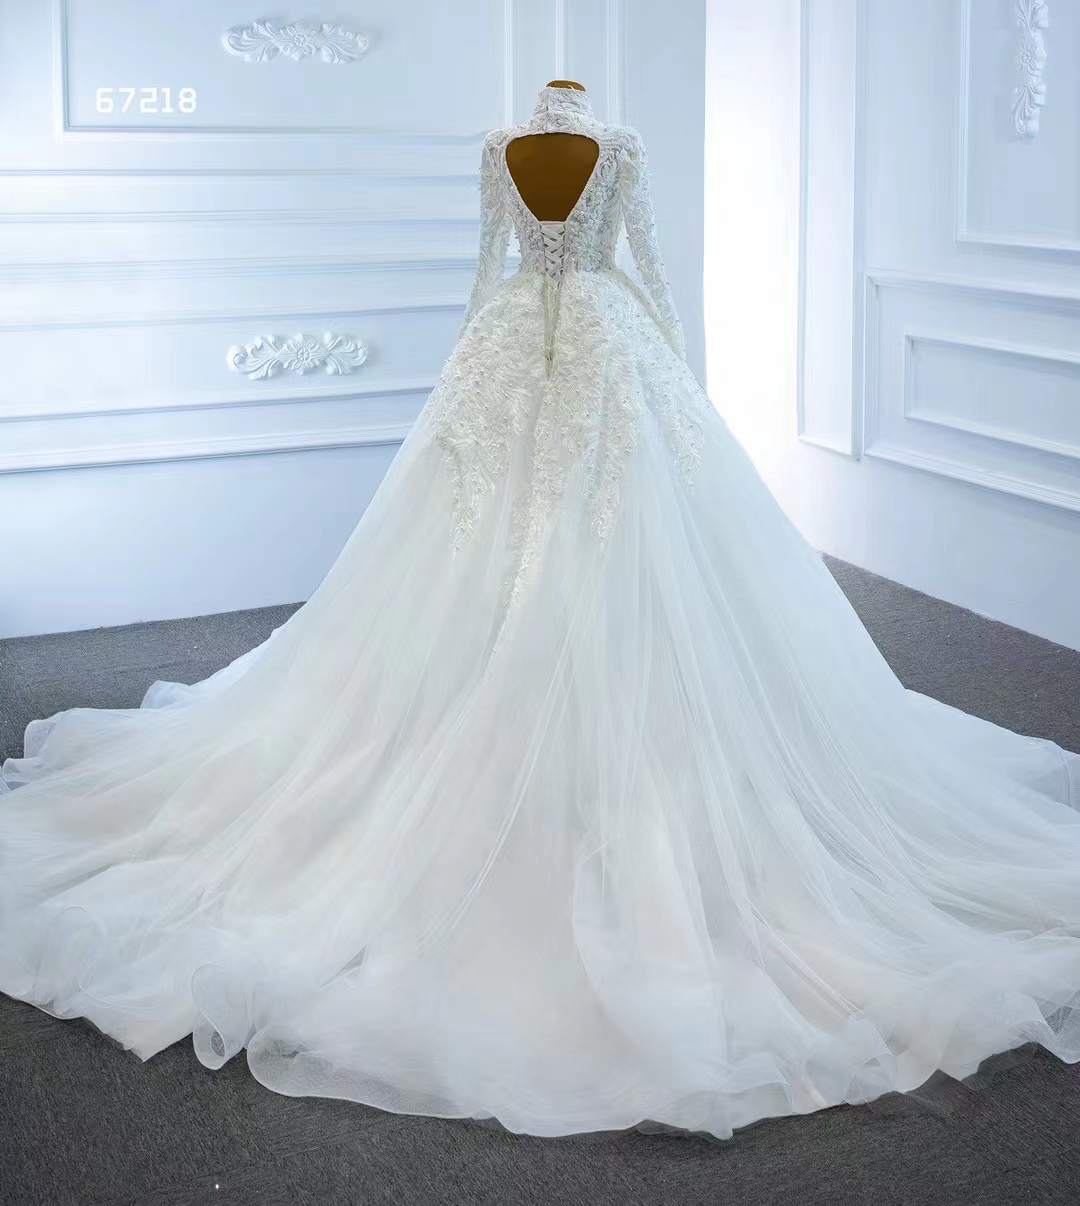 Mermaid Wedding Dress Gorgeous High Neck Long Sleeve Lace Detachable Train Bridal Gowns SM67218